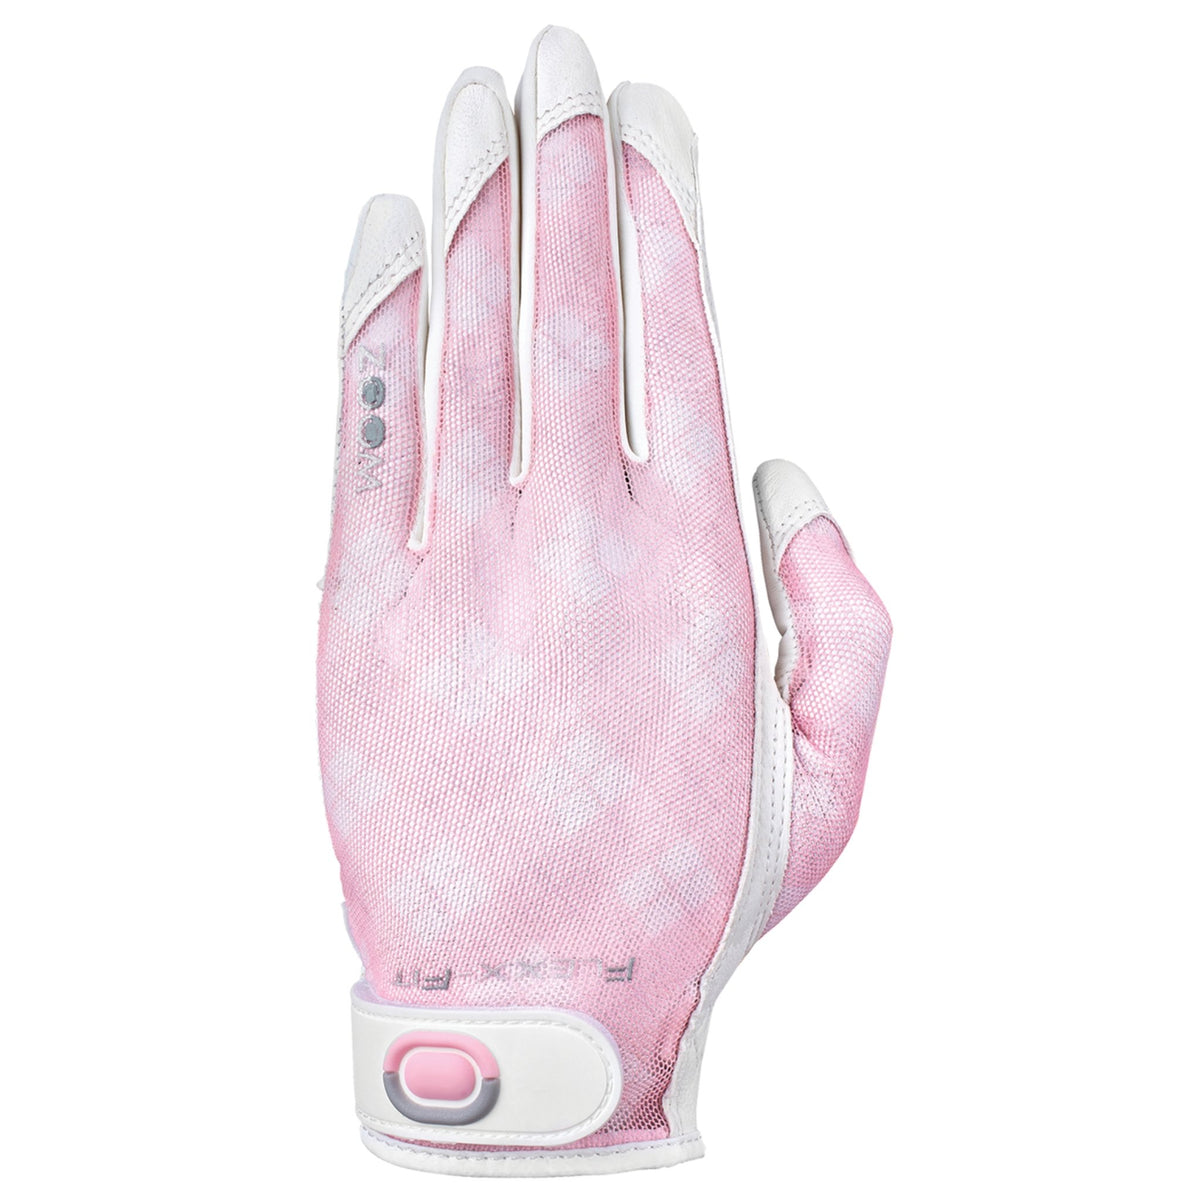 Sun Style Zoom Glove - Vichy Light Pink (LH) - Fairway Fittings